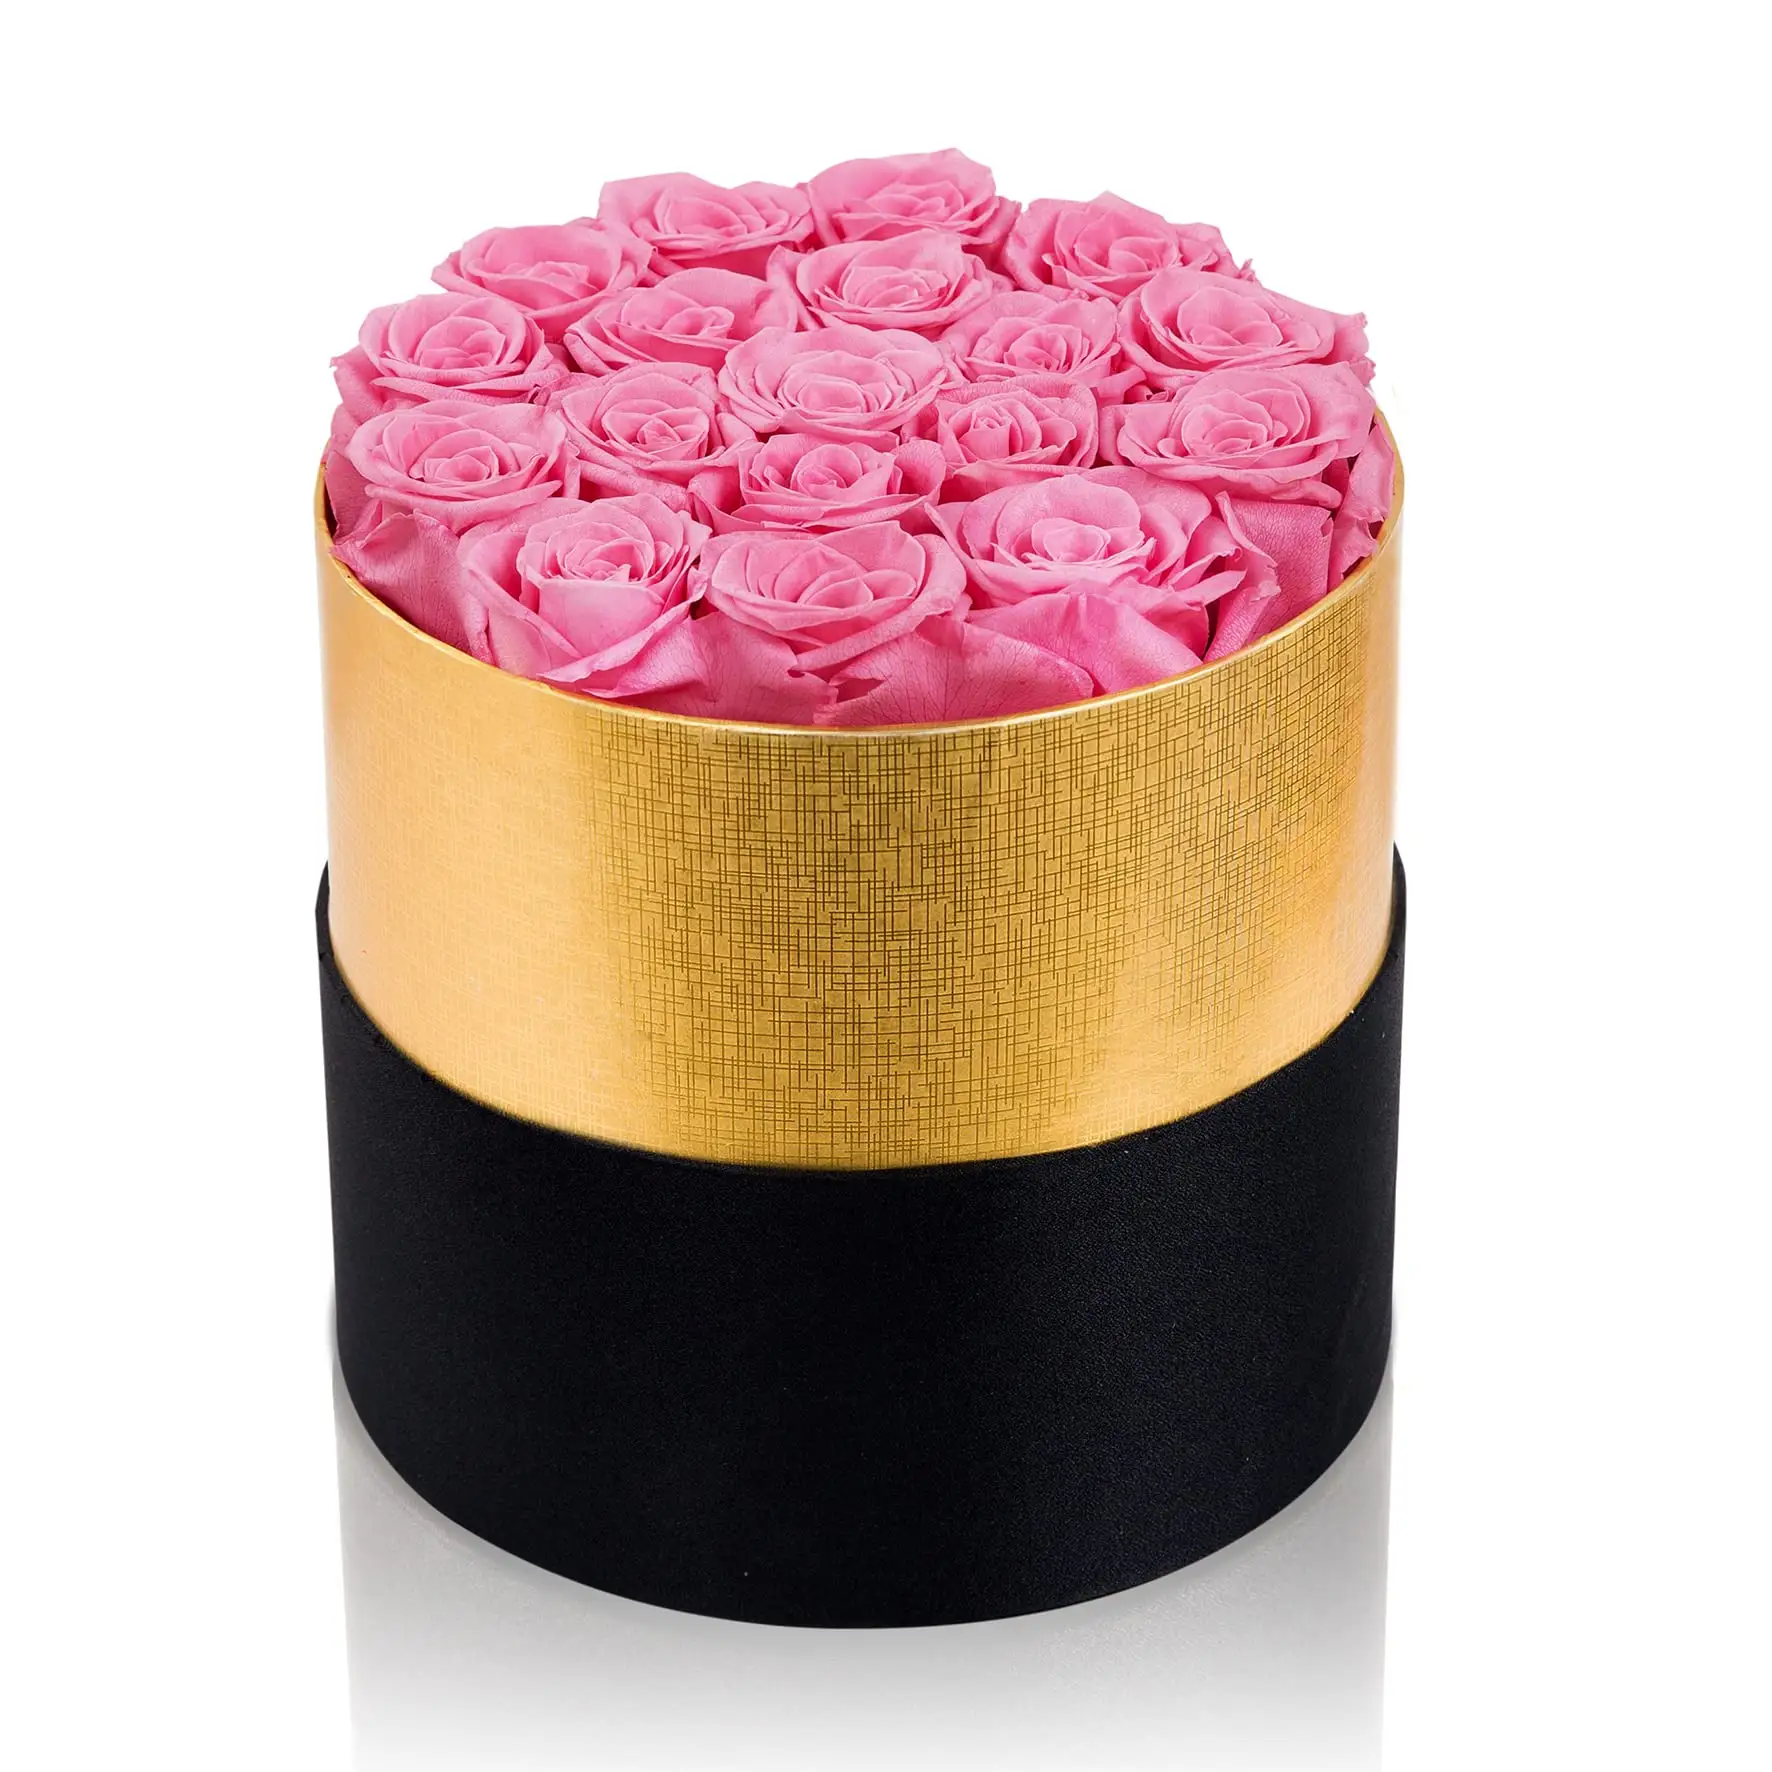 UO Wholesale 18pcs pink preserved roses rosas eternas preservadas decorative valentines rose long lasting roses flower in box